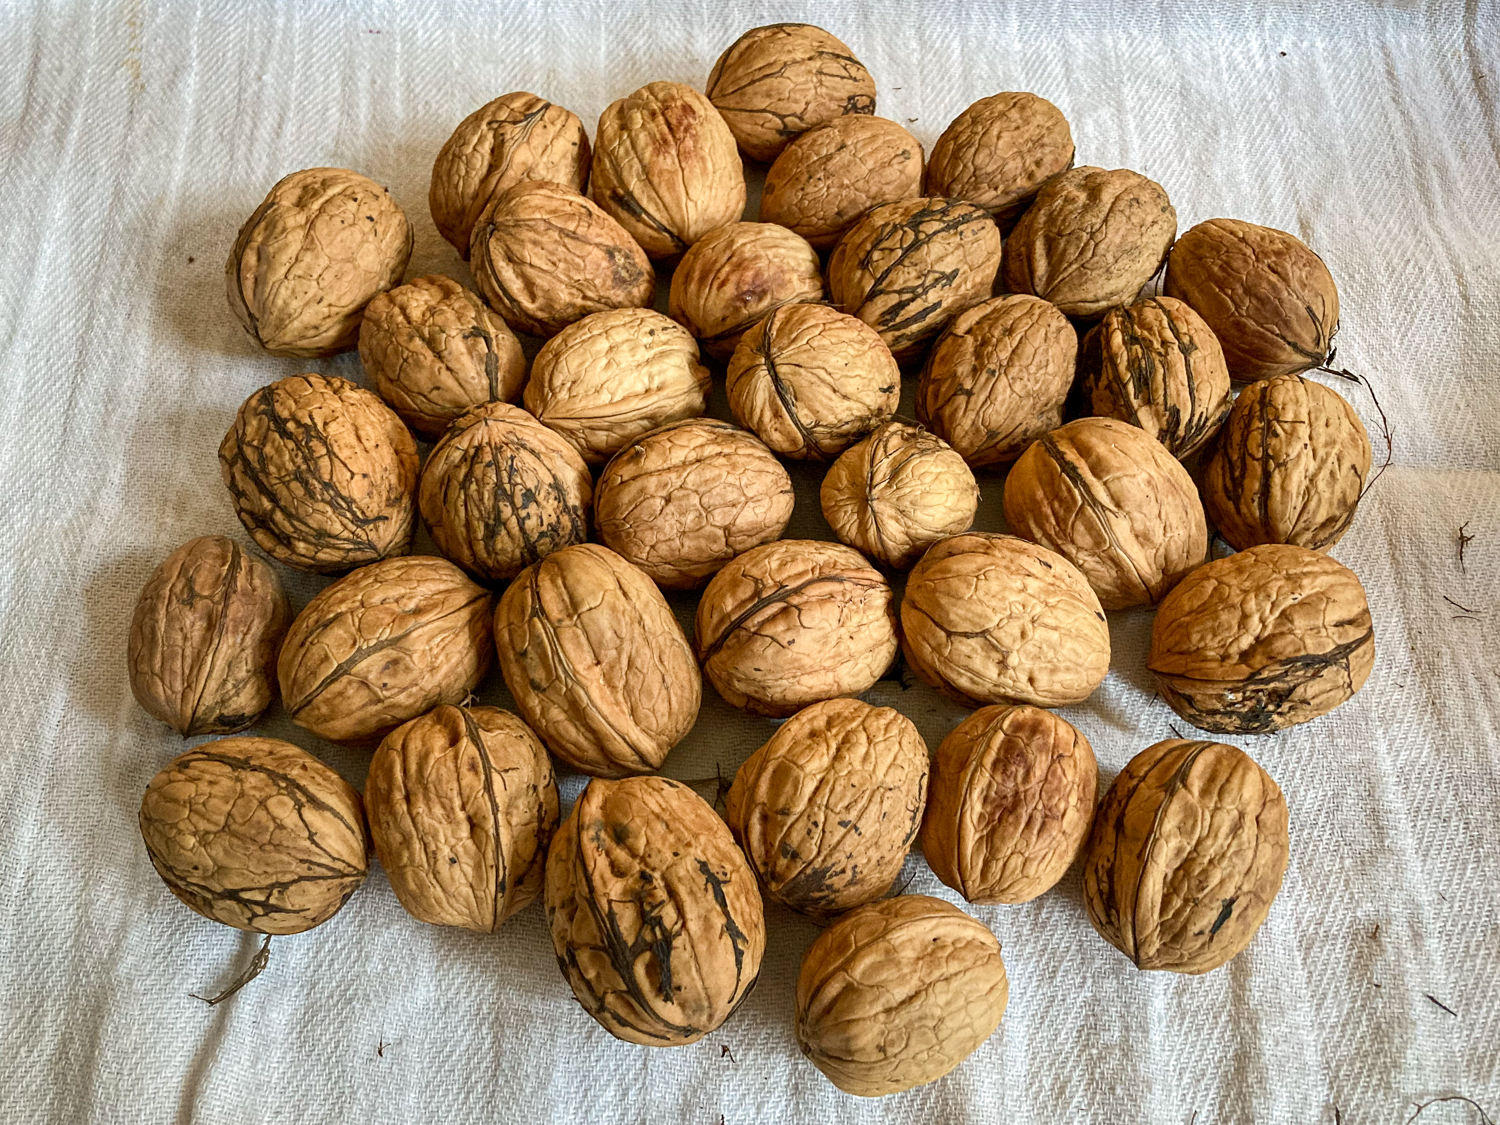 30 unshelled walnuts on a white cloth